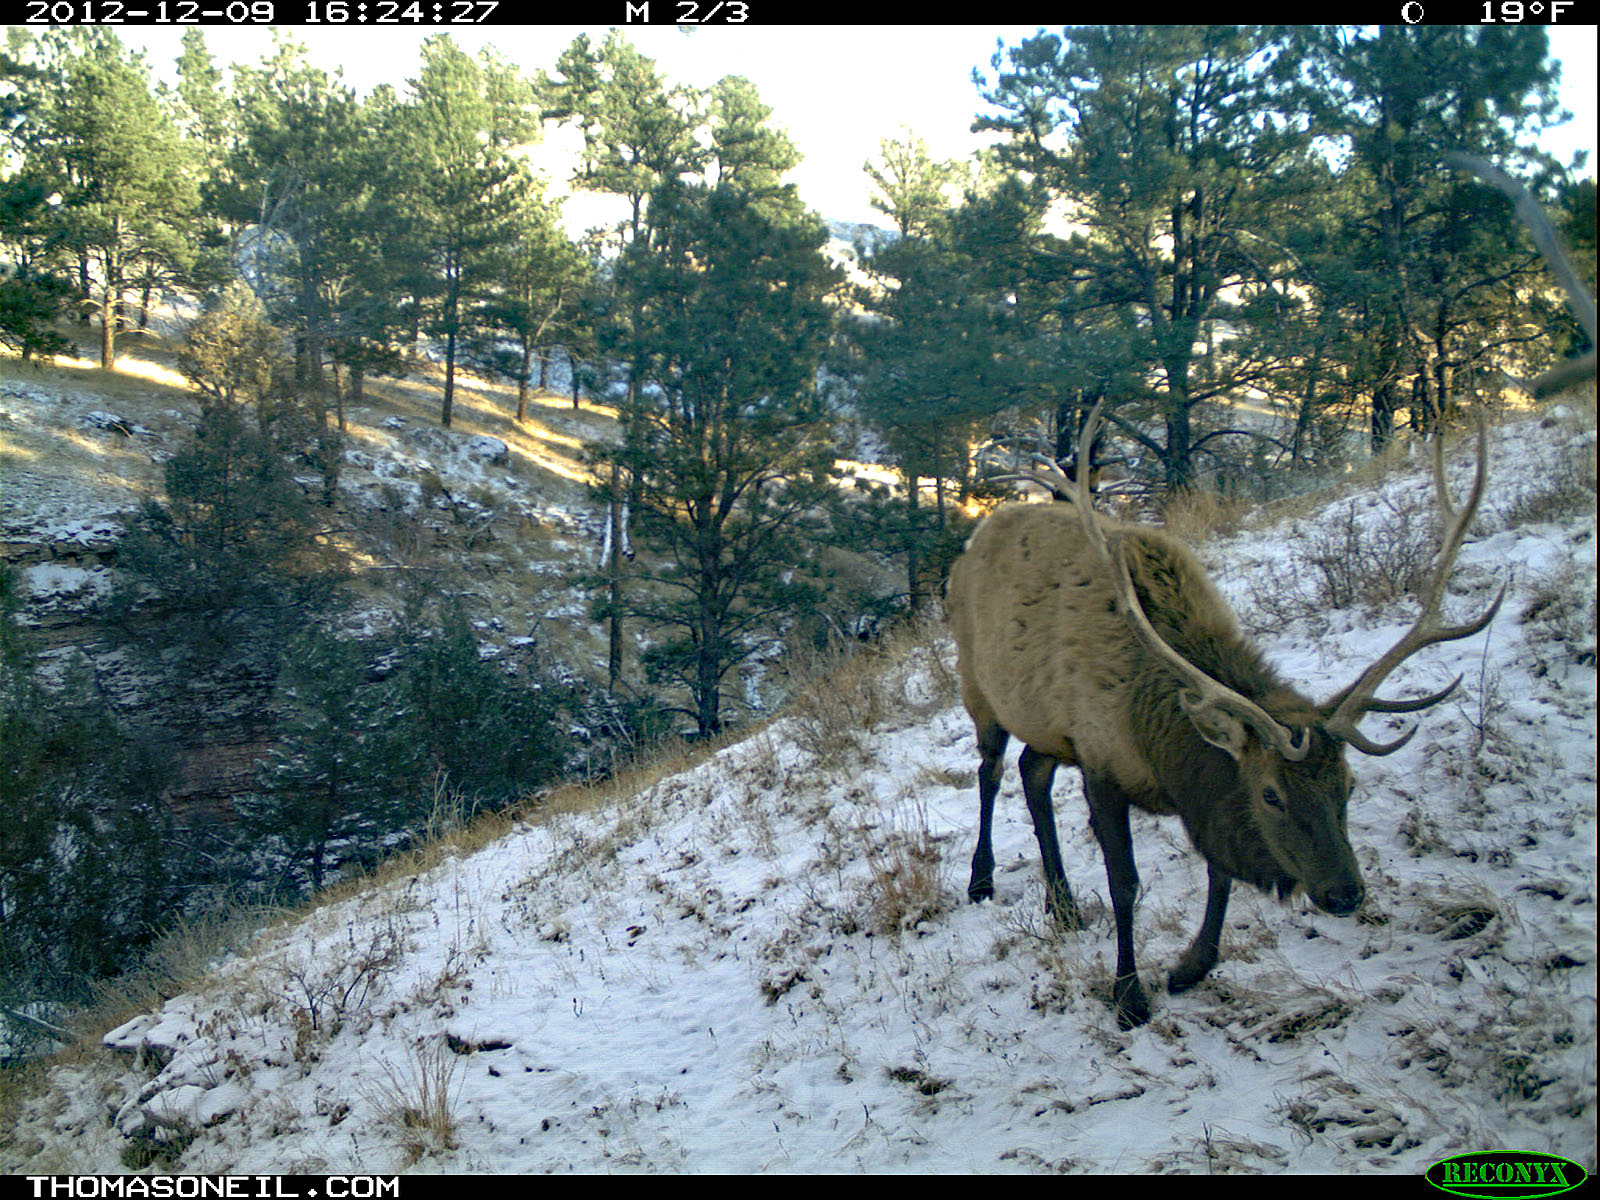 Elk, trailcam photo from Dec. 9, 2012, Wind Cave National Park, South Dakota.